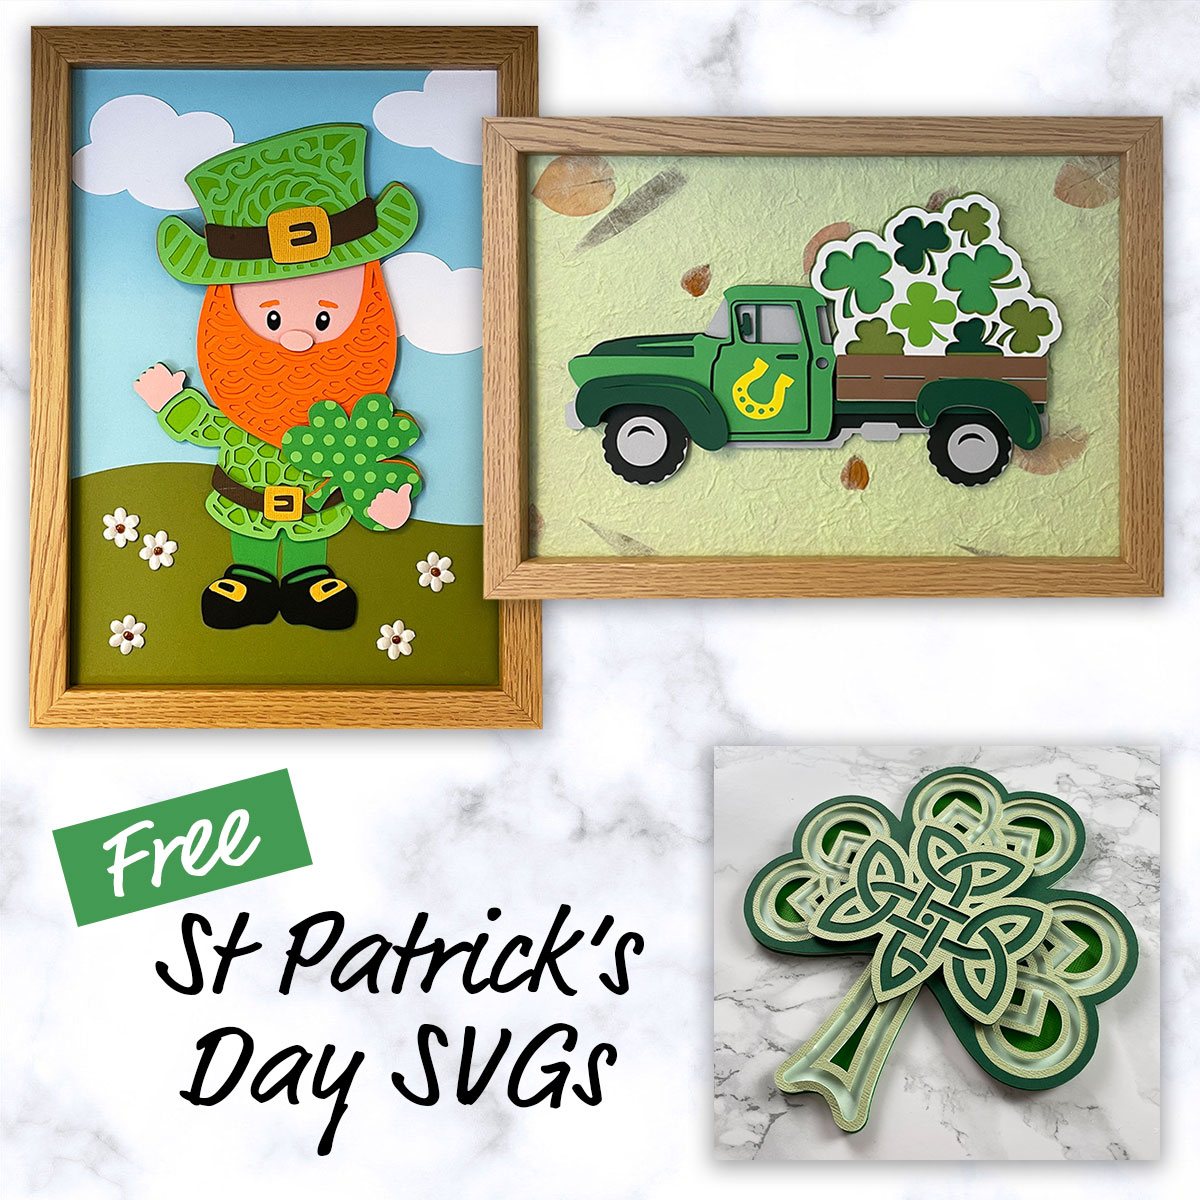 Free St Patrick’s Day SVG Files ☘️ Shamrocks, Leprechauns & More!